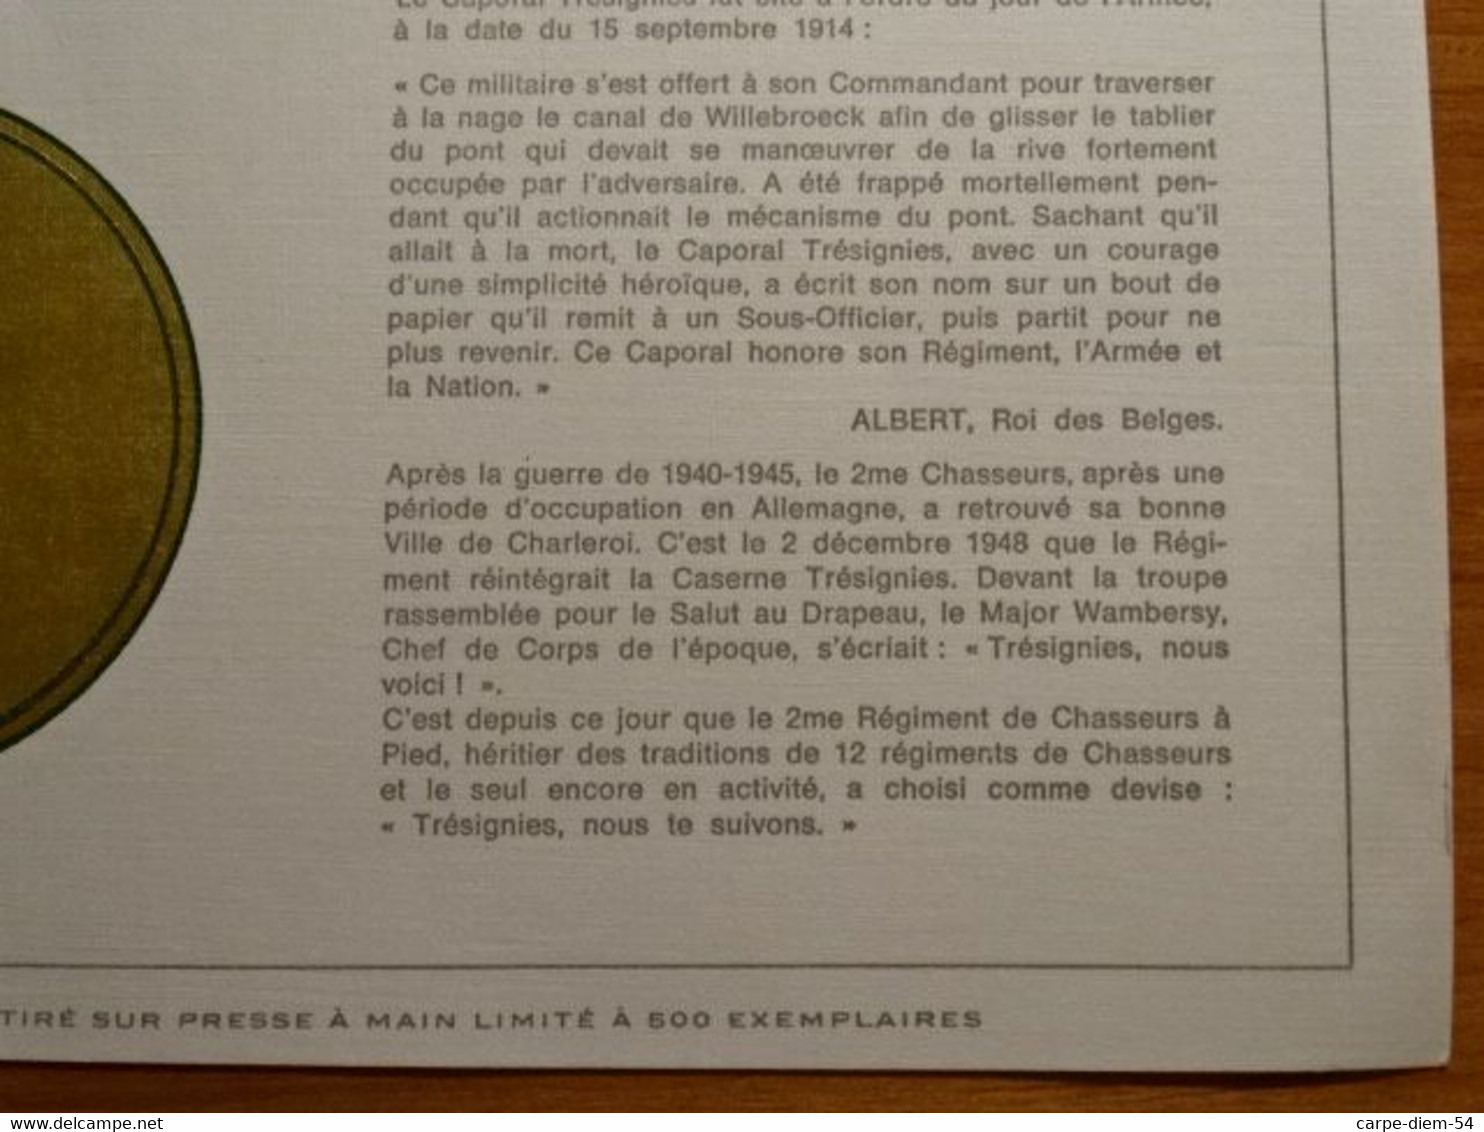 Belgique - Feuillet De Luxe - Caporal L. Tresignies - Heros National - 26/08/1914 - Deluxe Sheetlets [LX]